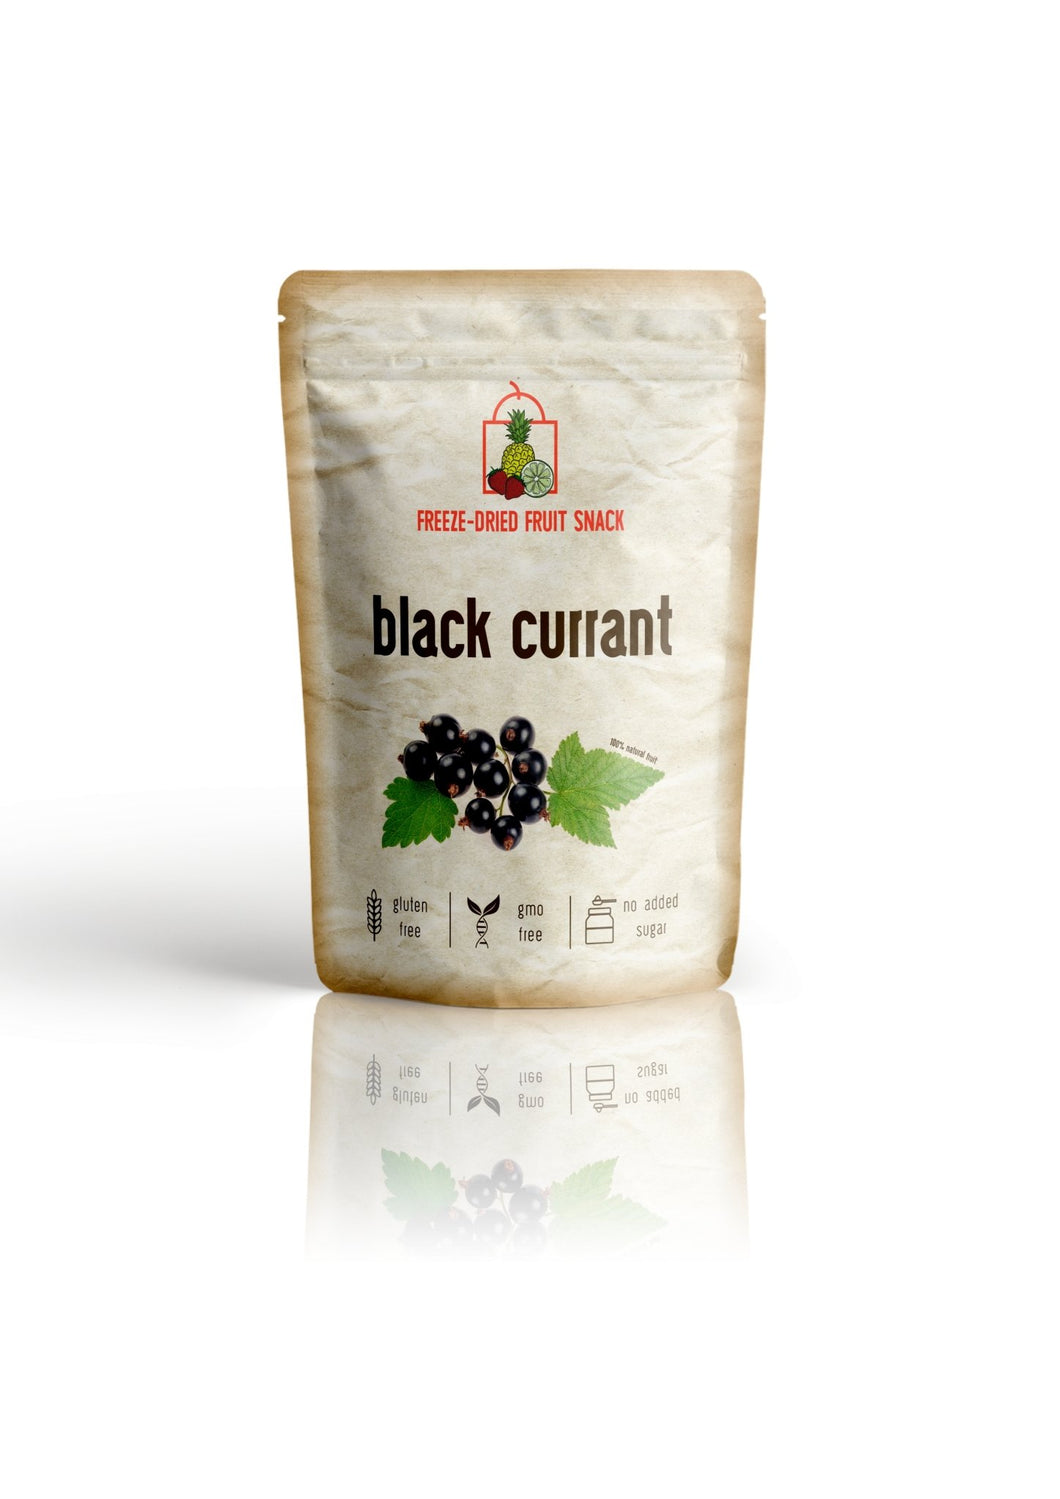 The Rotten Fruit Box - Freeze Dried Black Currant Snack Pouch by The Rotten Fruit Box - Farm2Me - carro-6366961 - 05600811500246 -